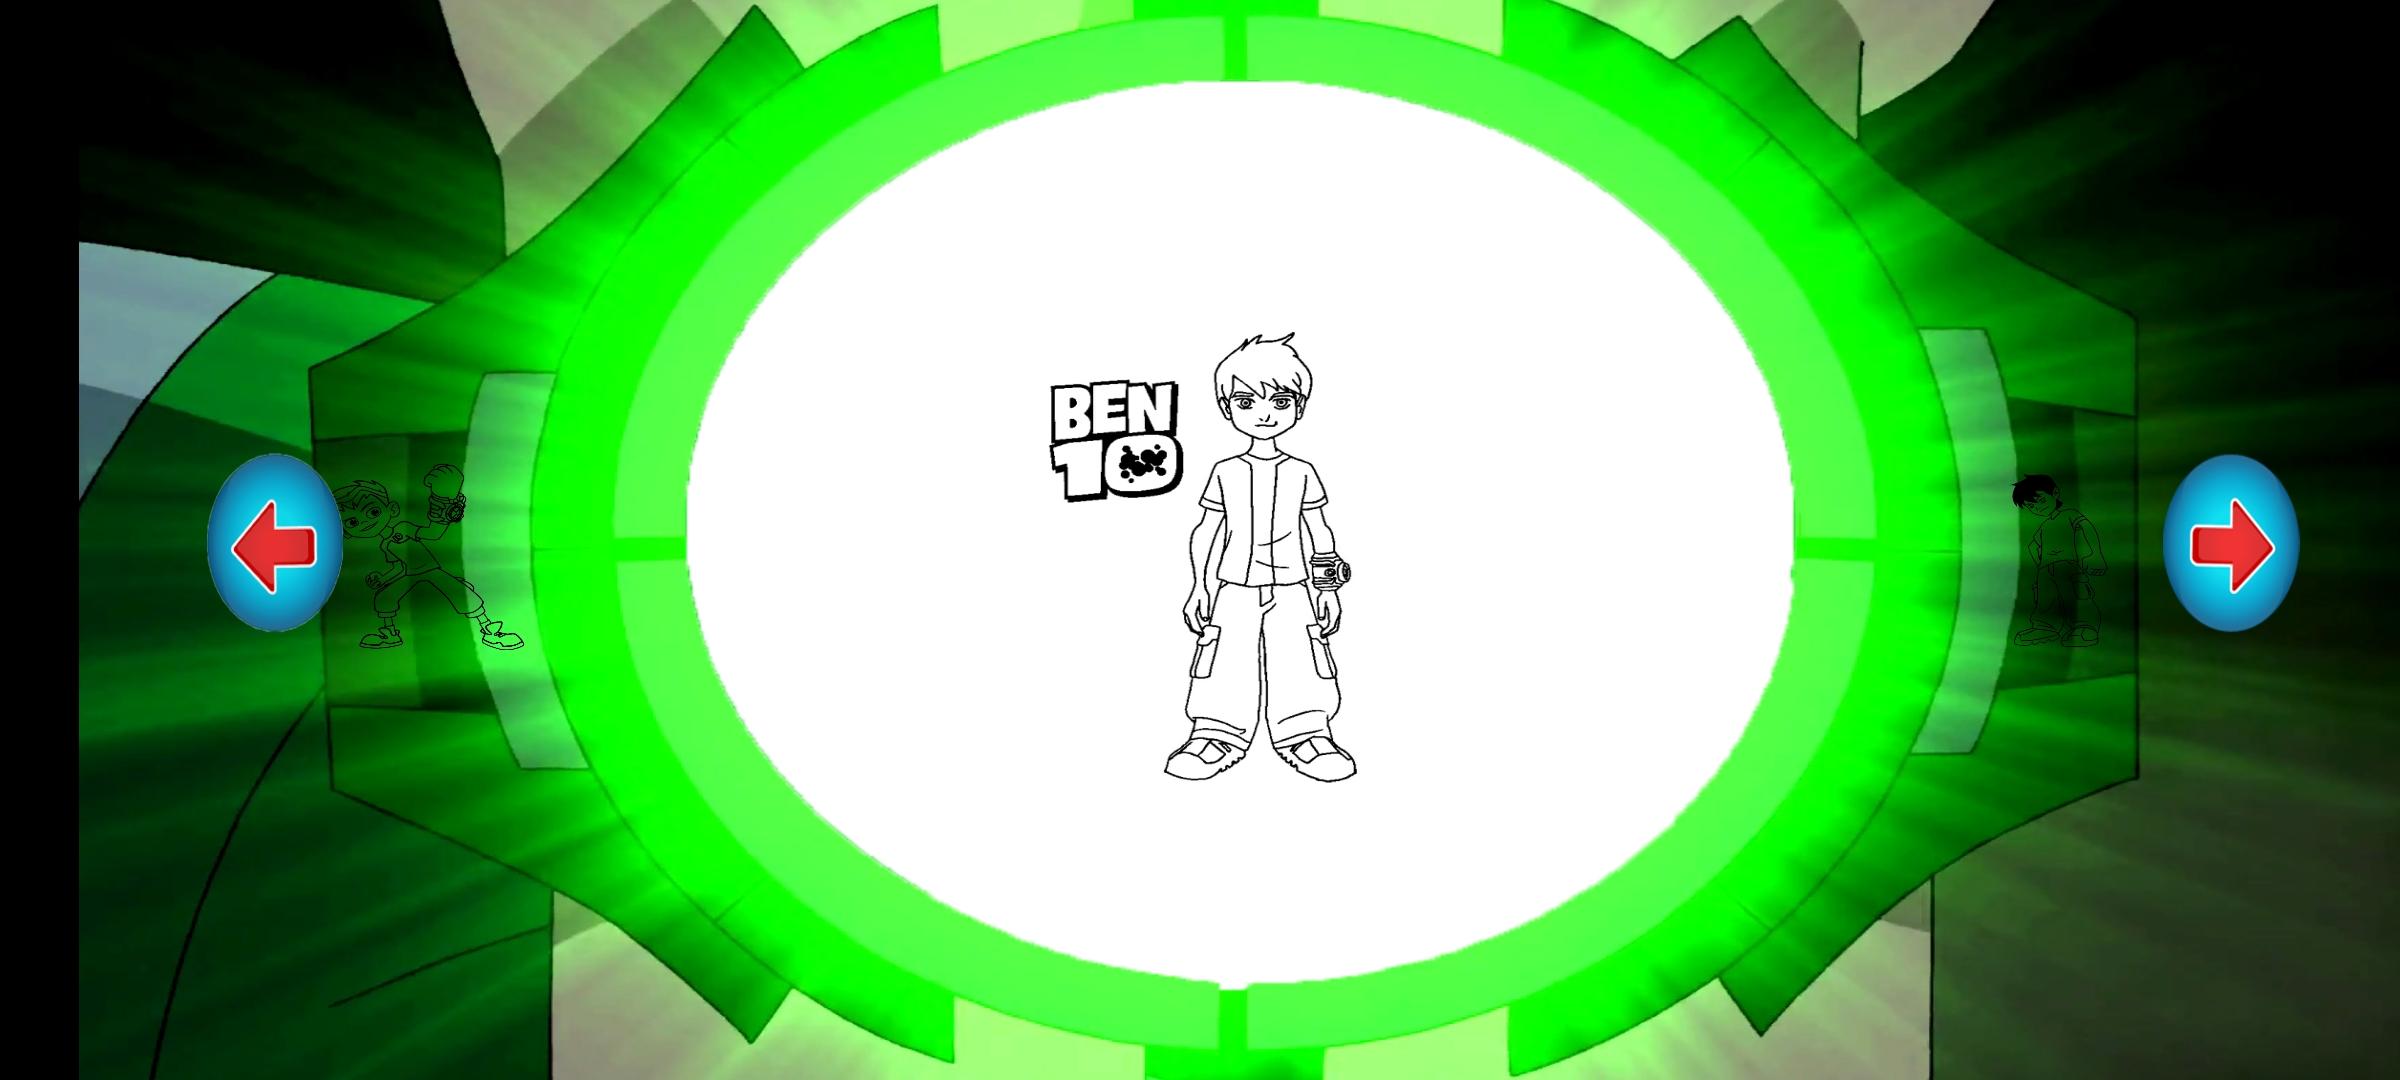 Ben  Coloring 10 heroes ultimate 1.0 Screenshot 14